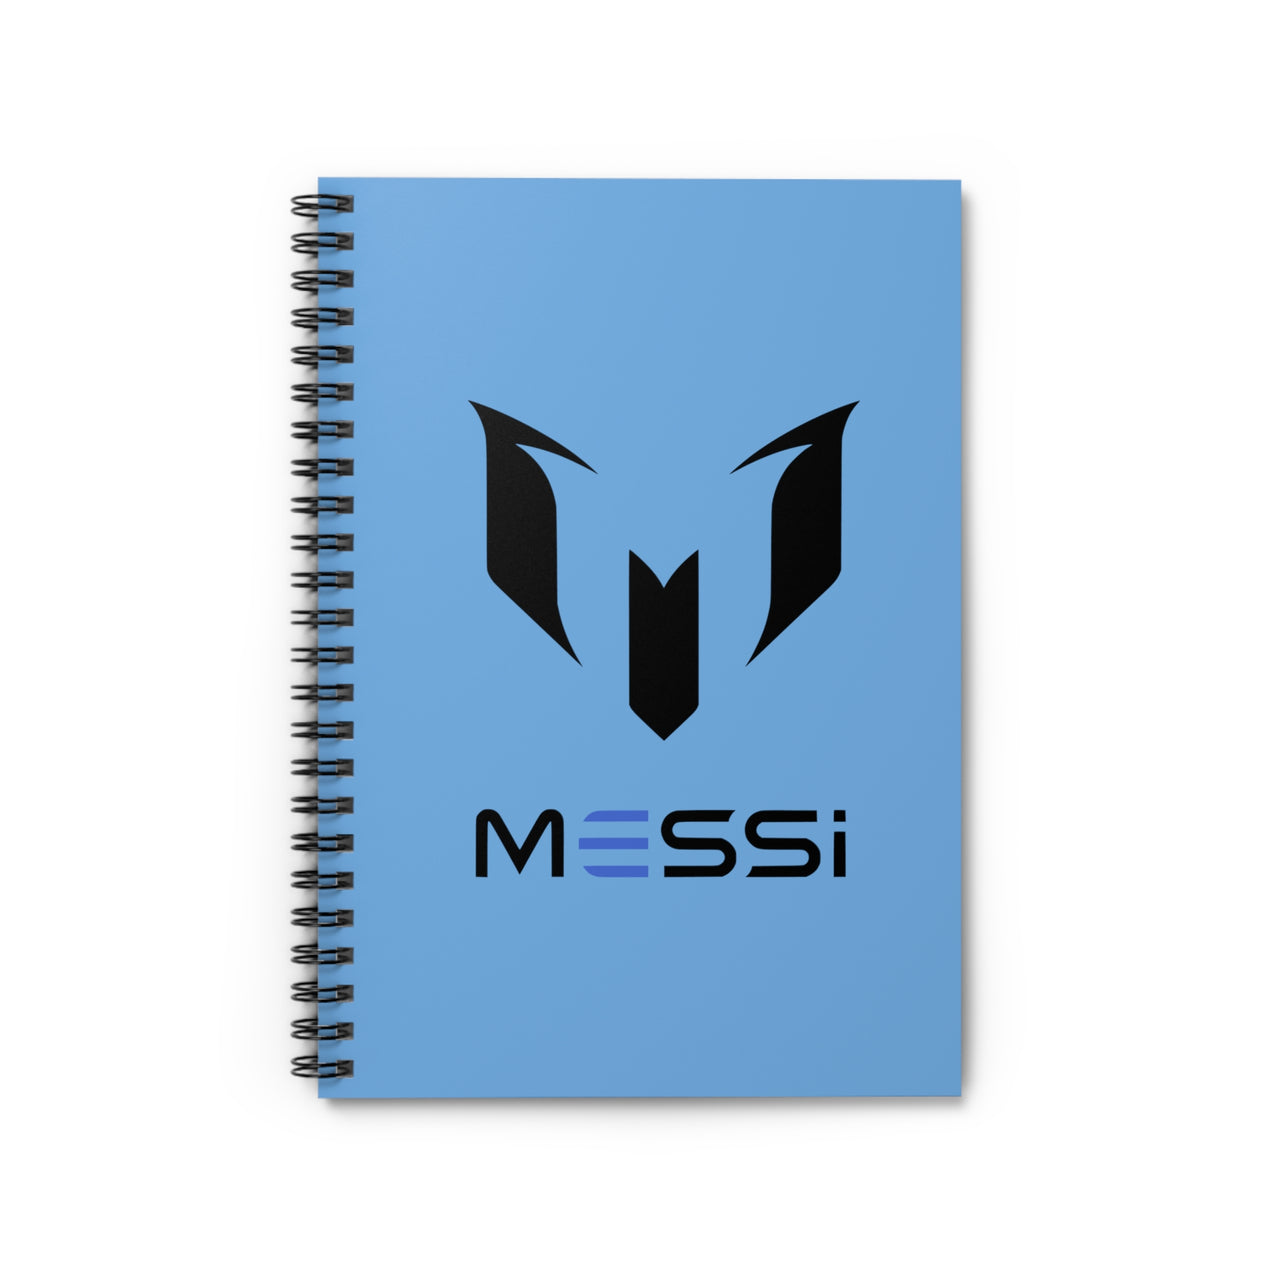 Lionel Messi Spiral Notebook - Ruled Line